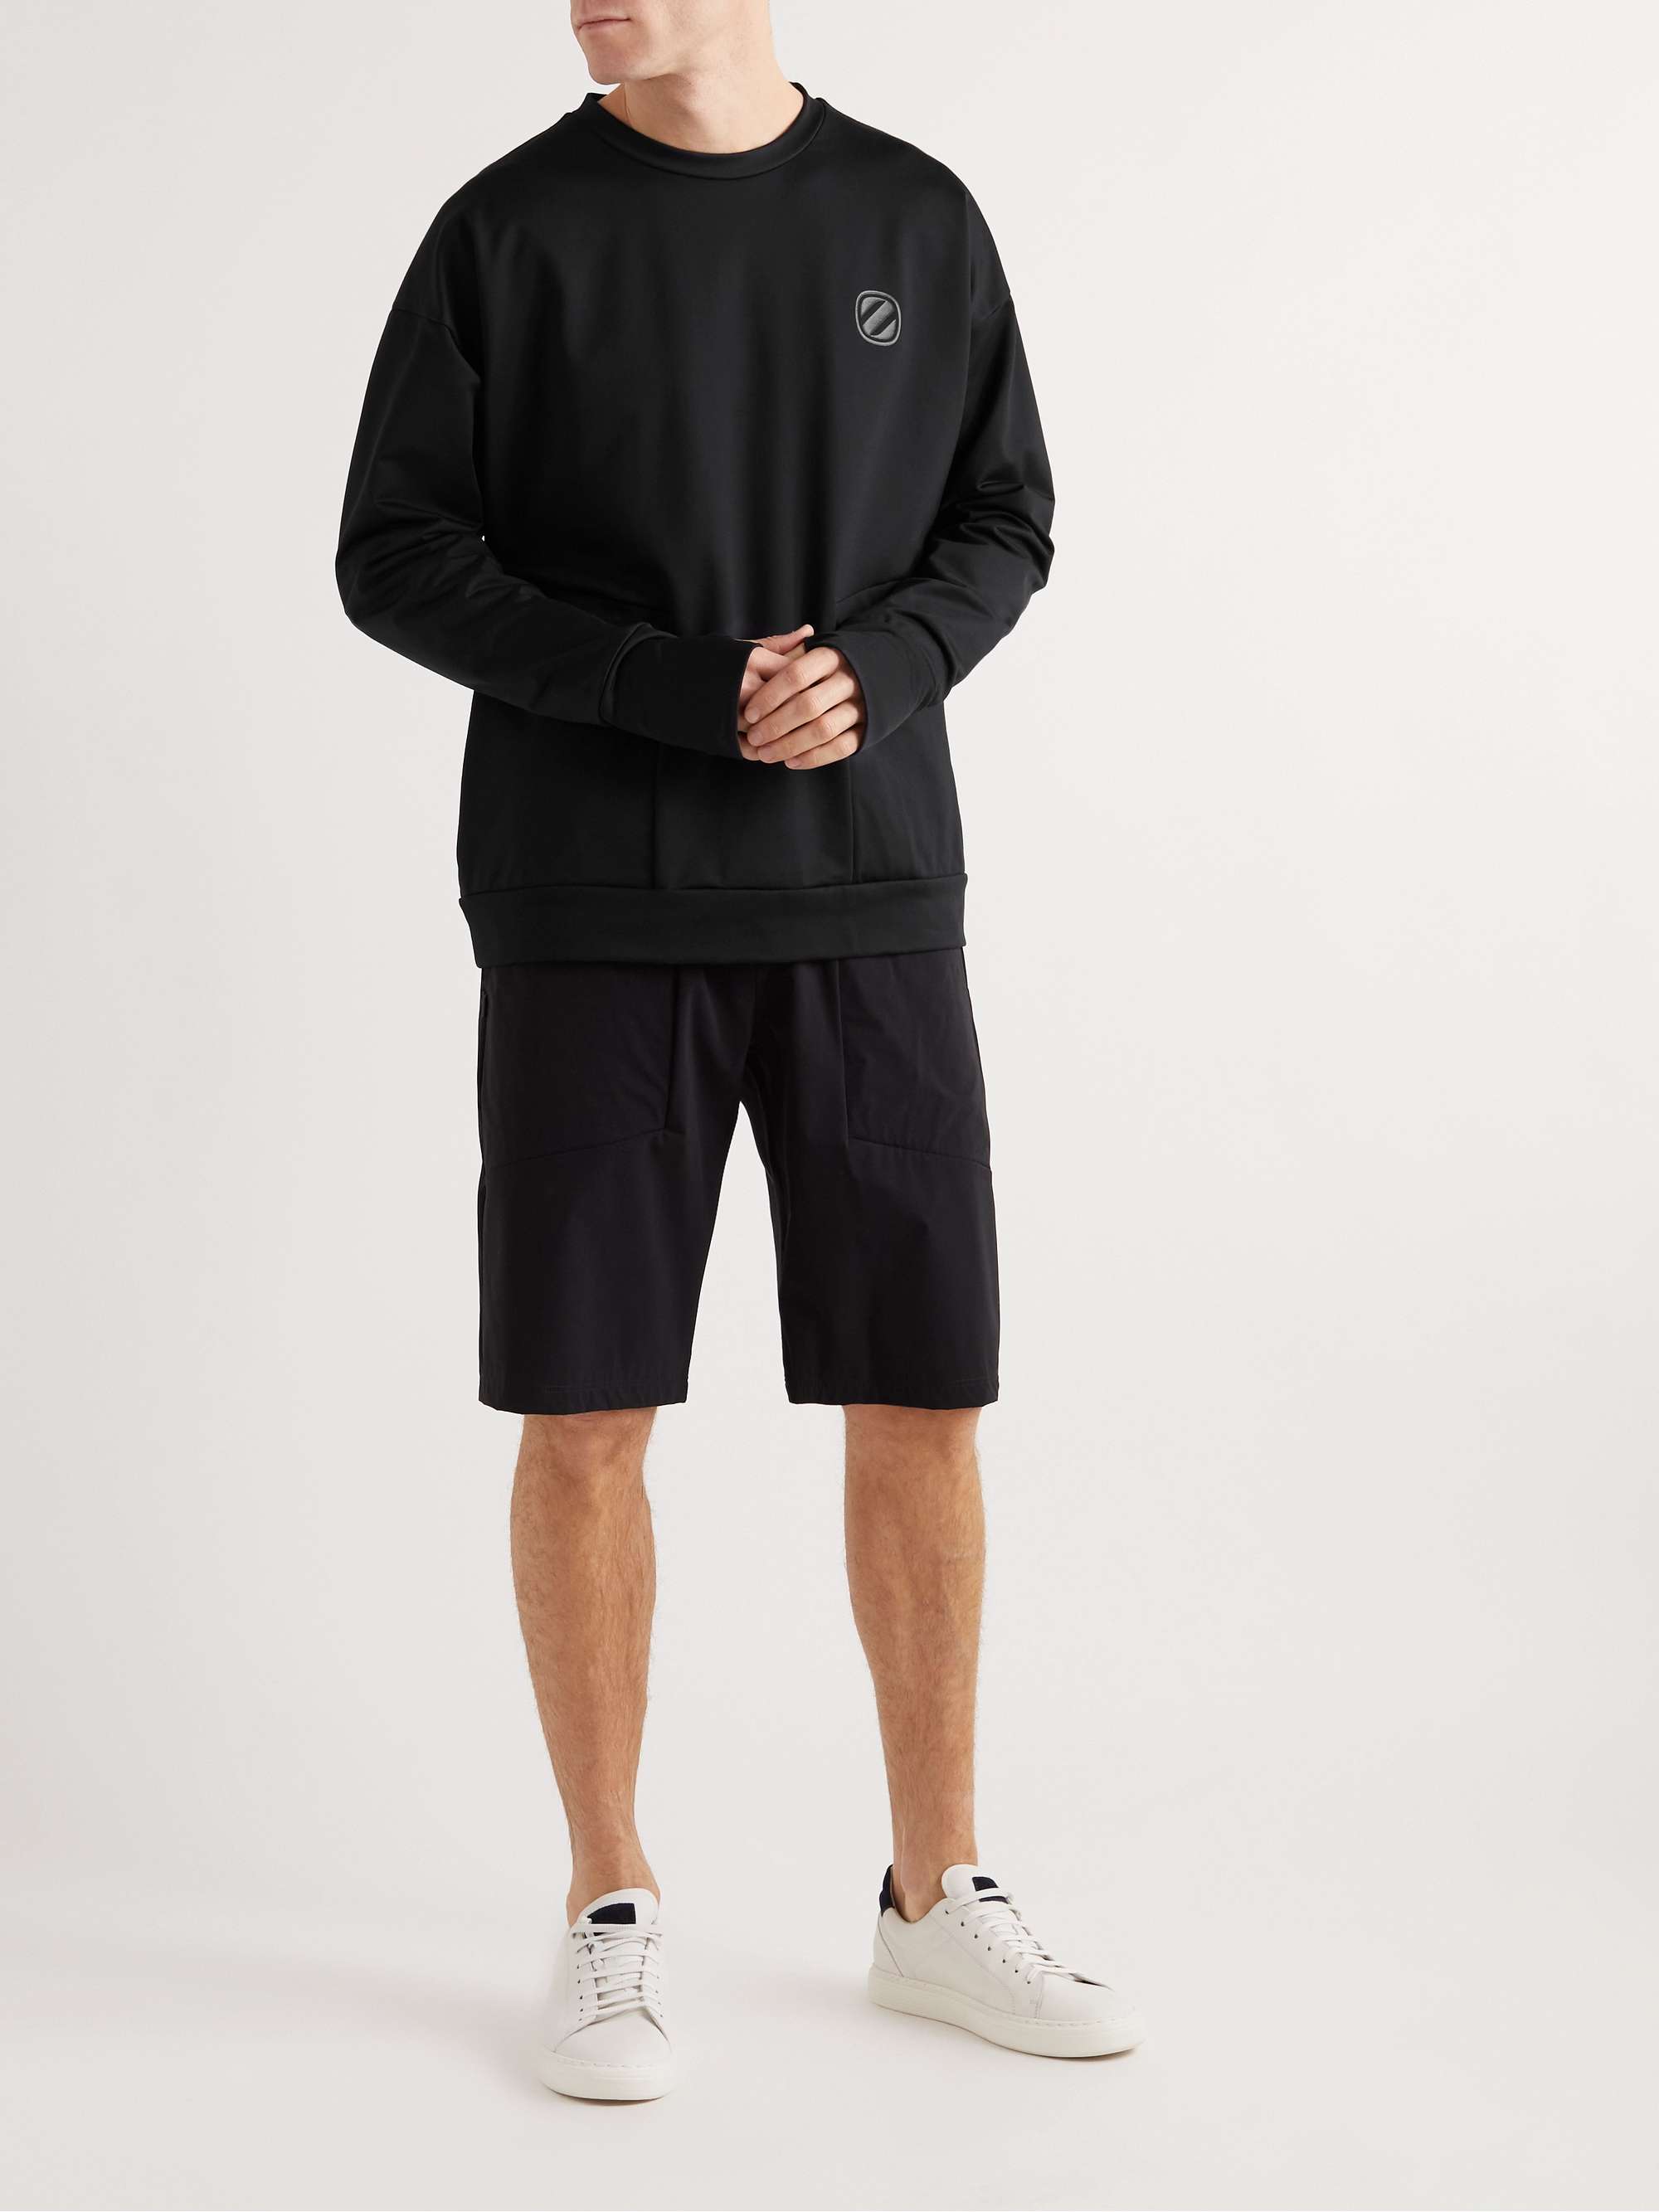 ZEGNA Oversized Logo-Print Stretch Modal and Cotton-Blend Jersey Sweatshirt